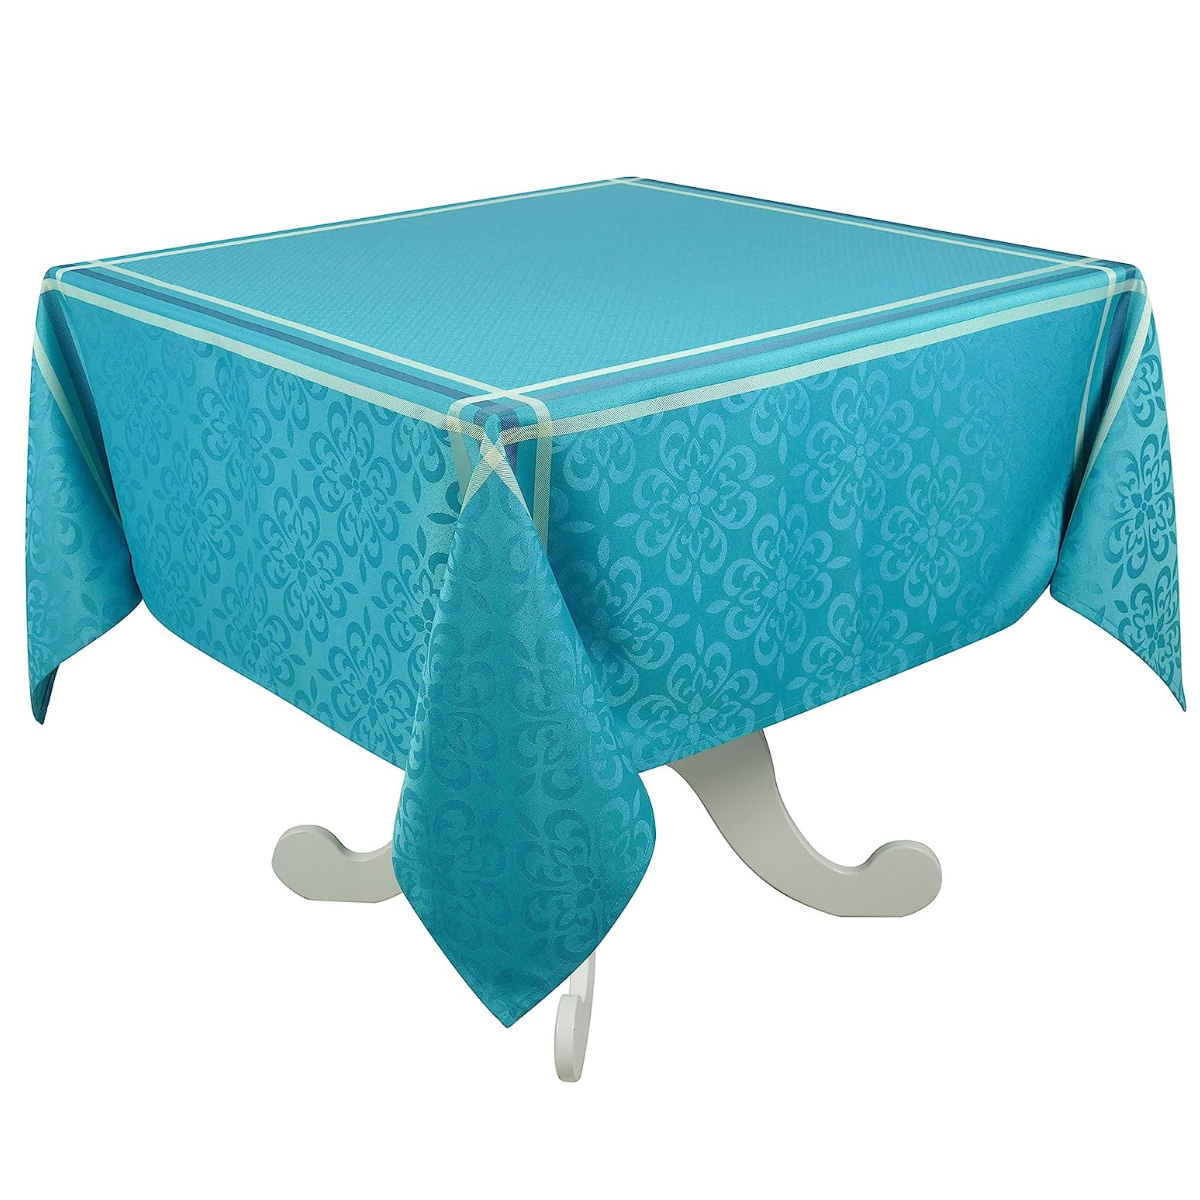 Bilbao coated tablecloth - blue